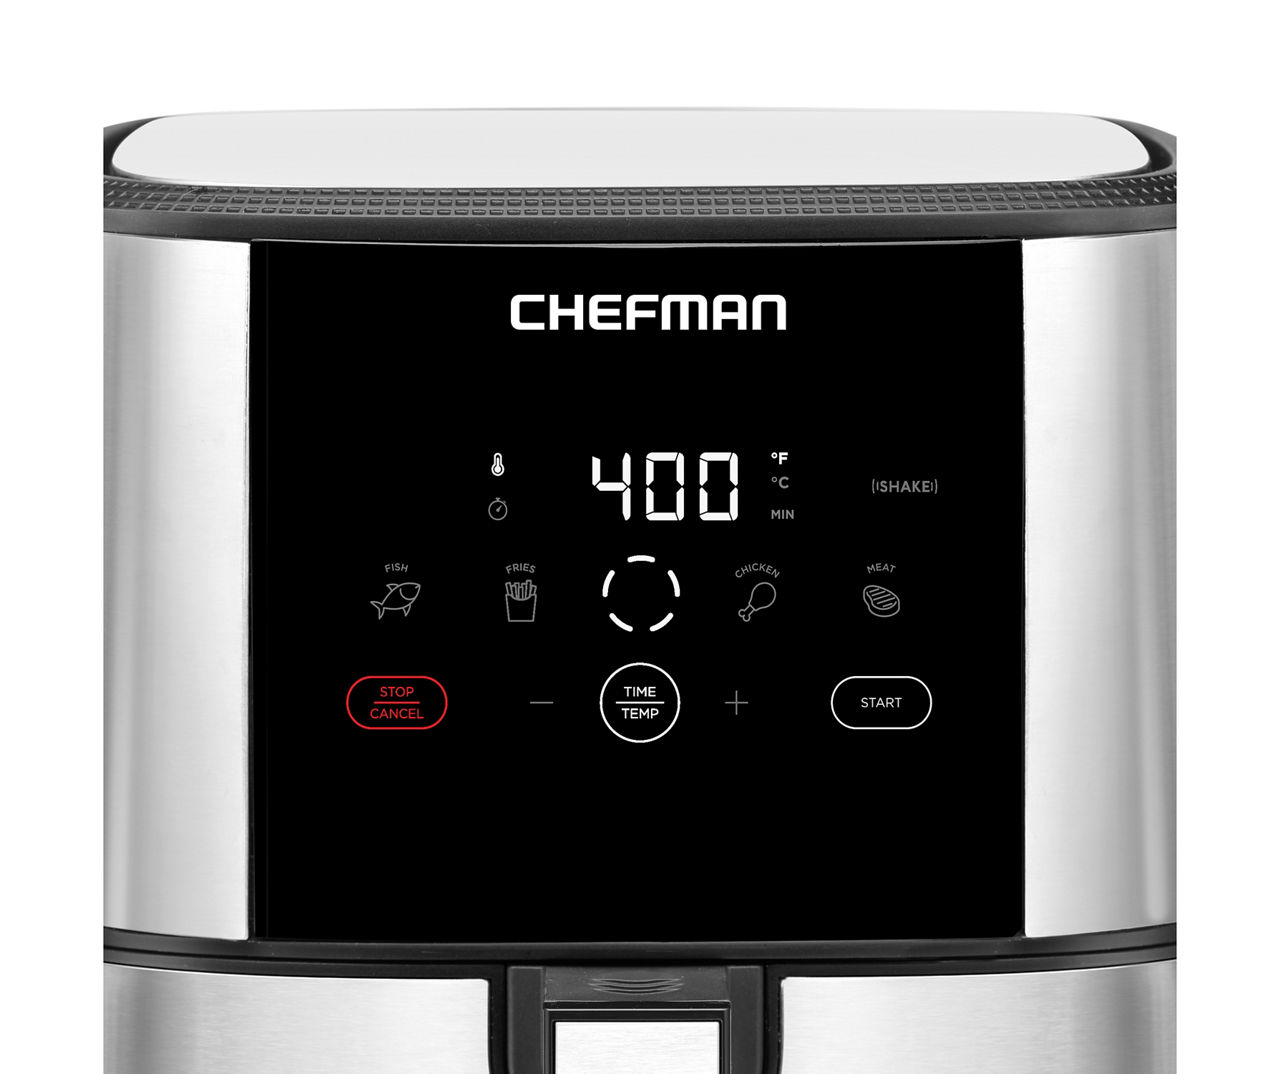 Chefman 5 Quart Digital Air Fryer - Stainless Steel